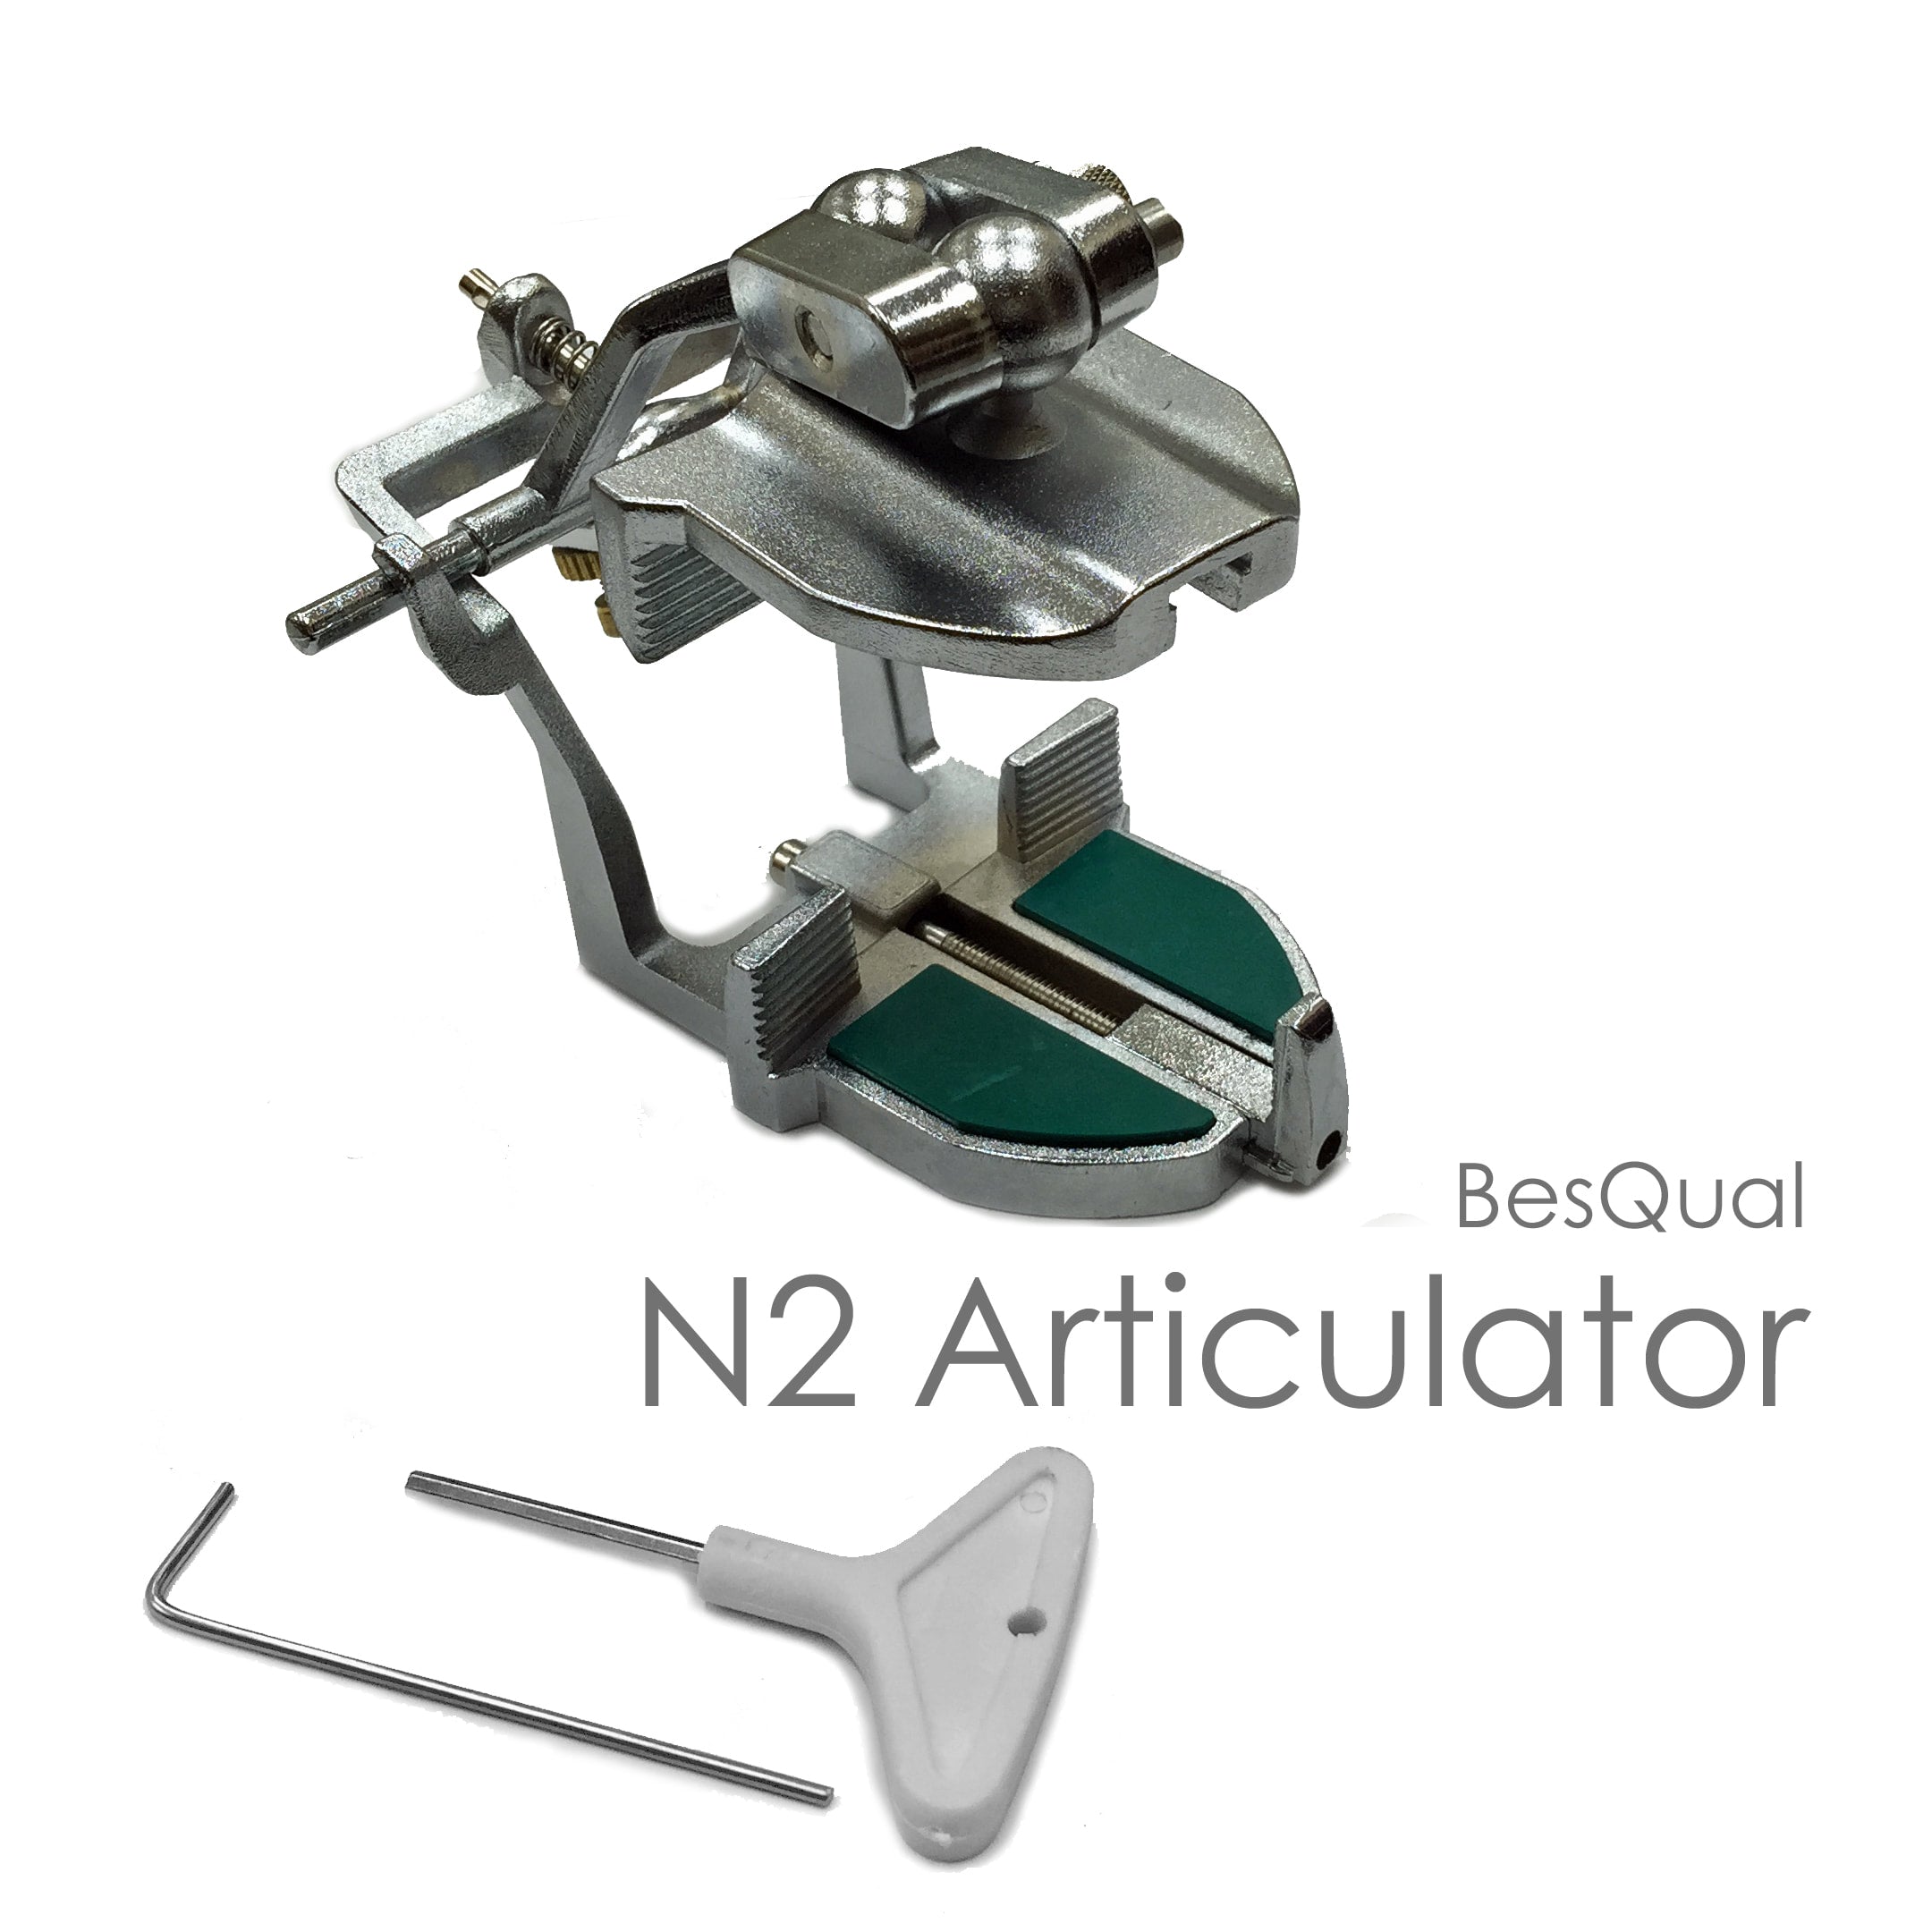 N2 Articulator - Clamp Type